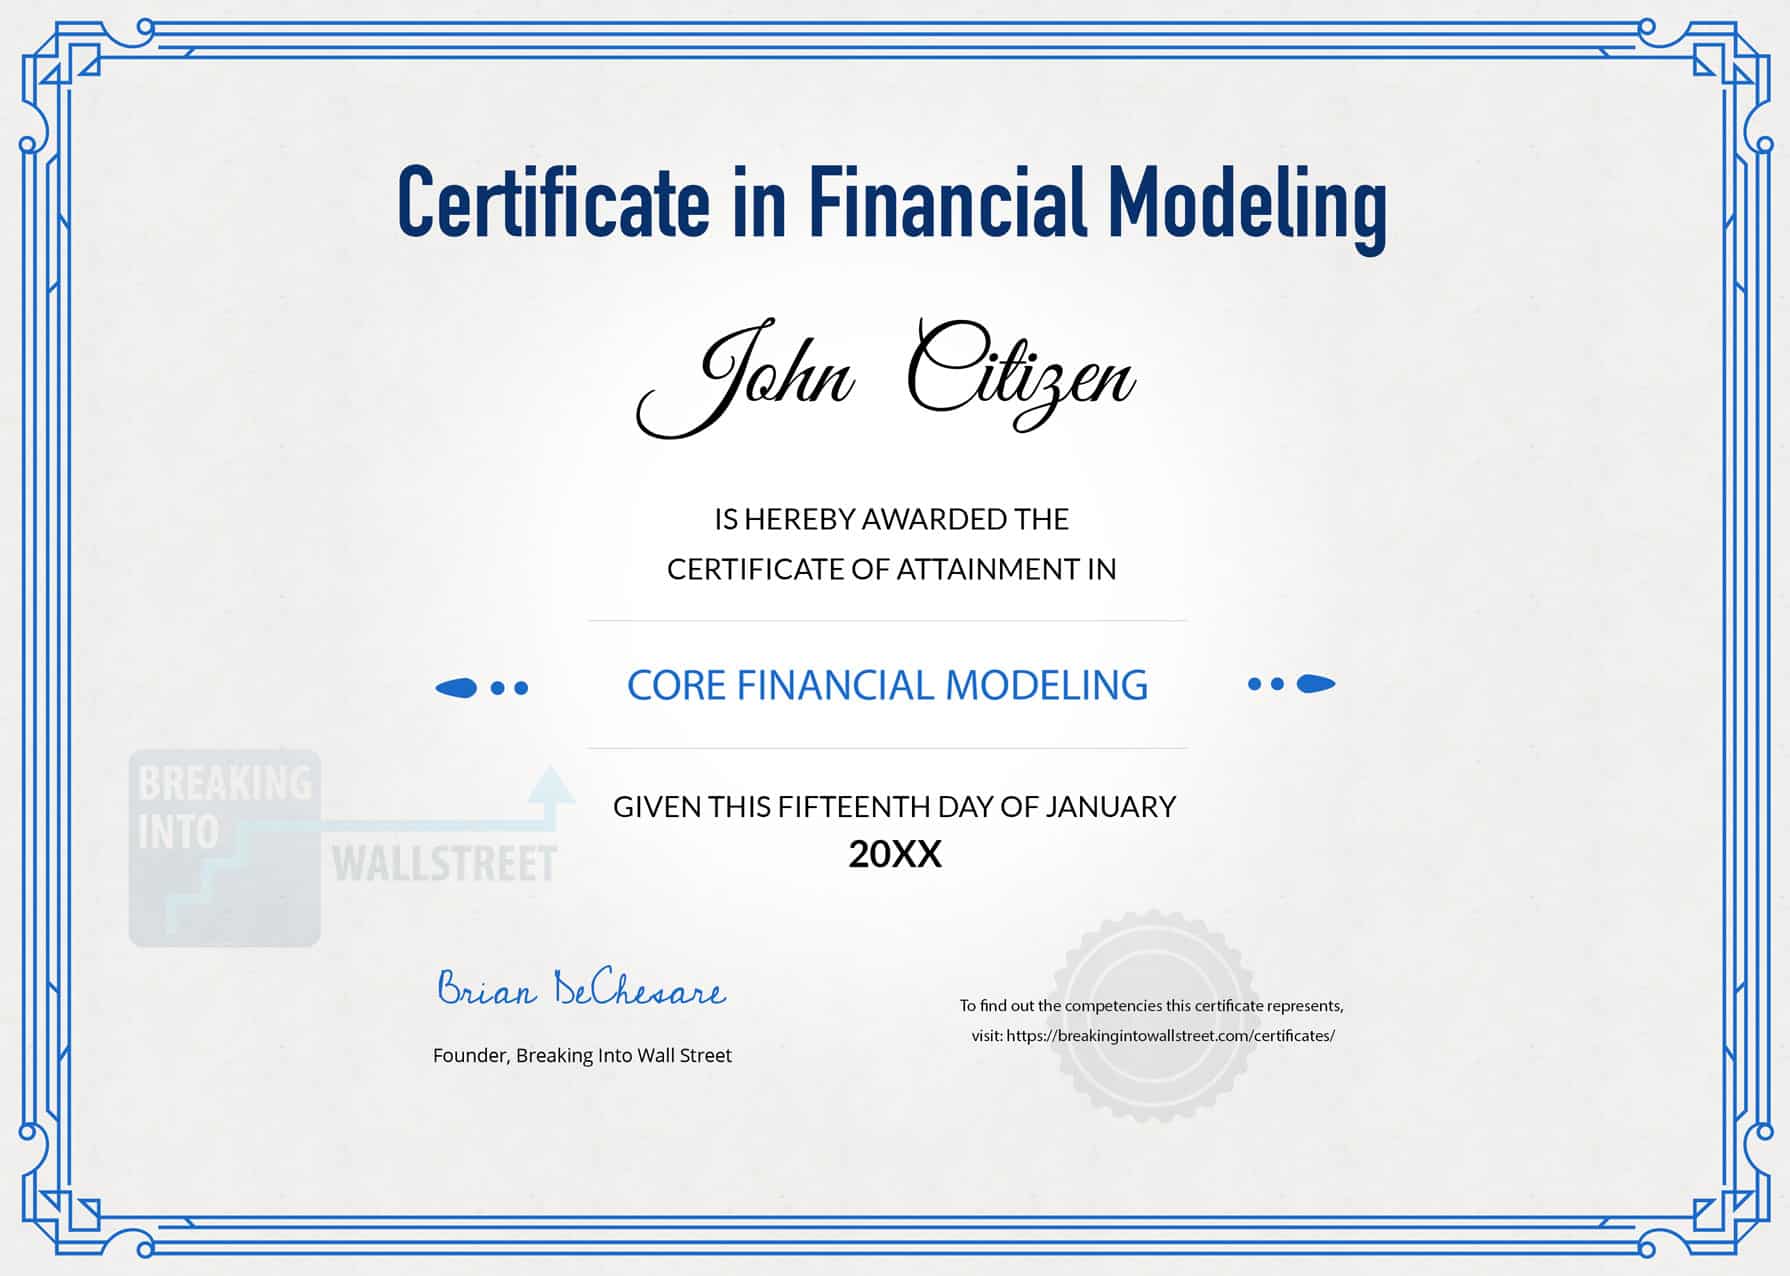 BIWS Certificate - Core Financial Modeling